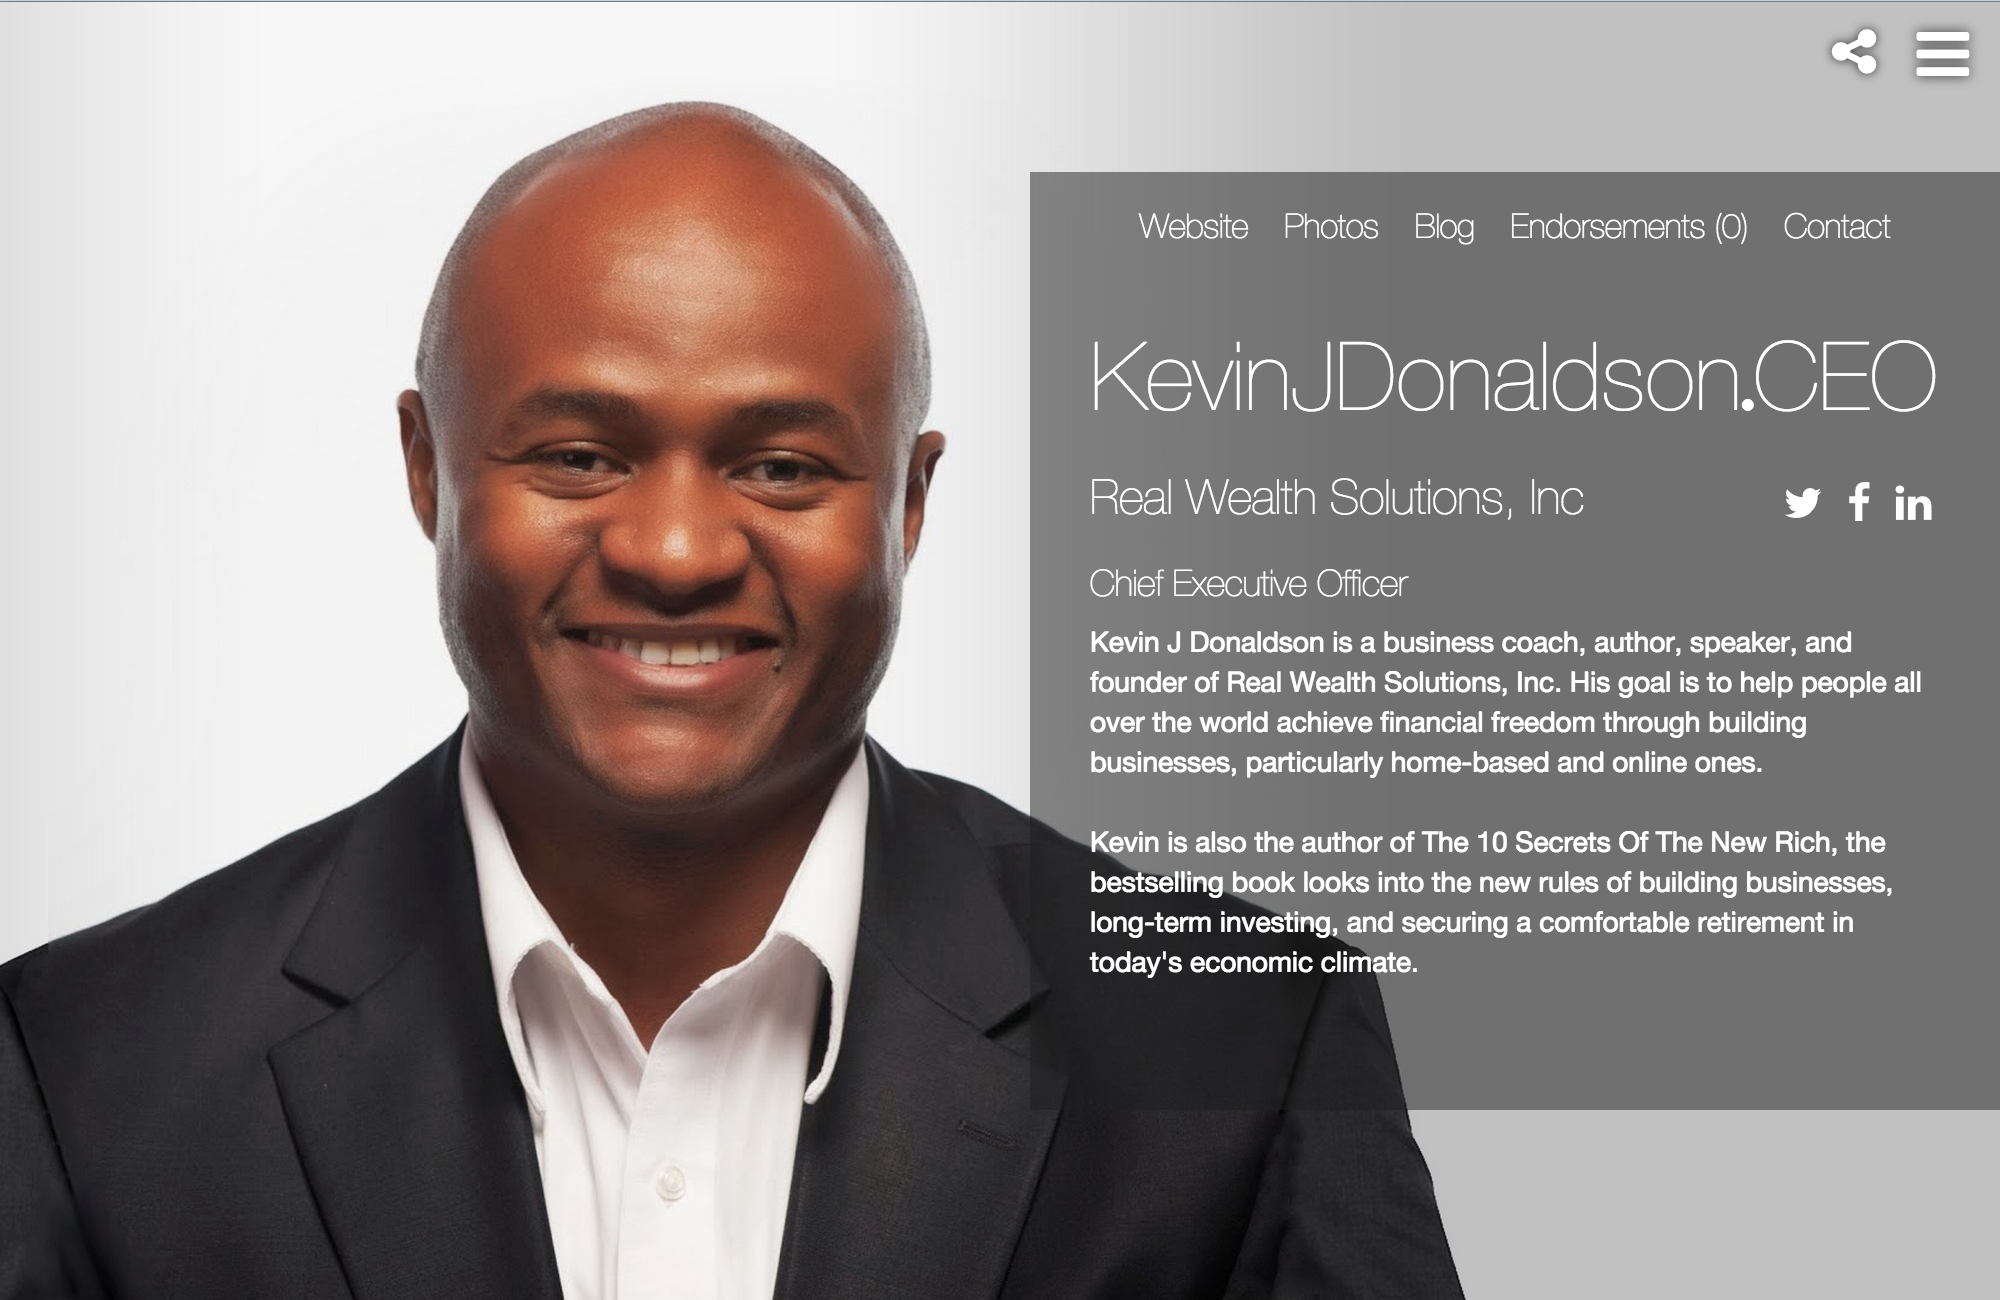 KevinJDonaldson.CEO